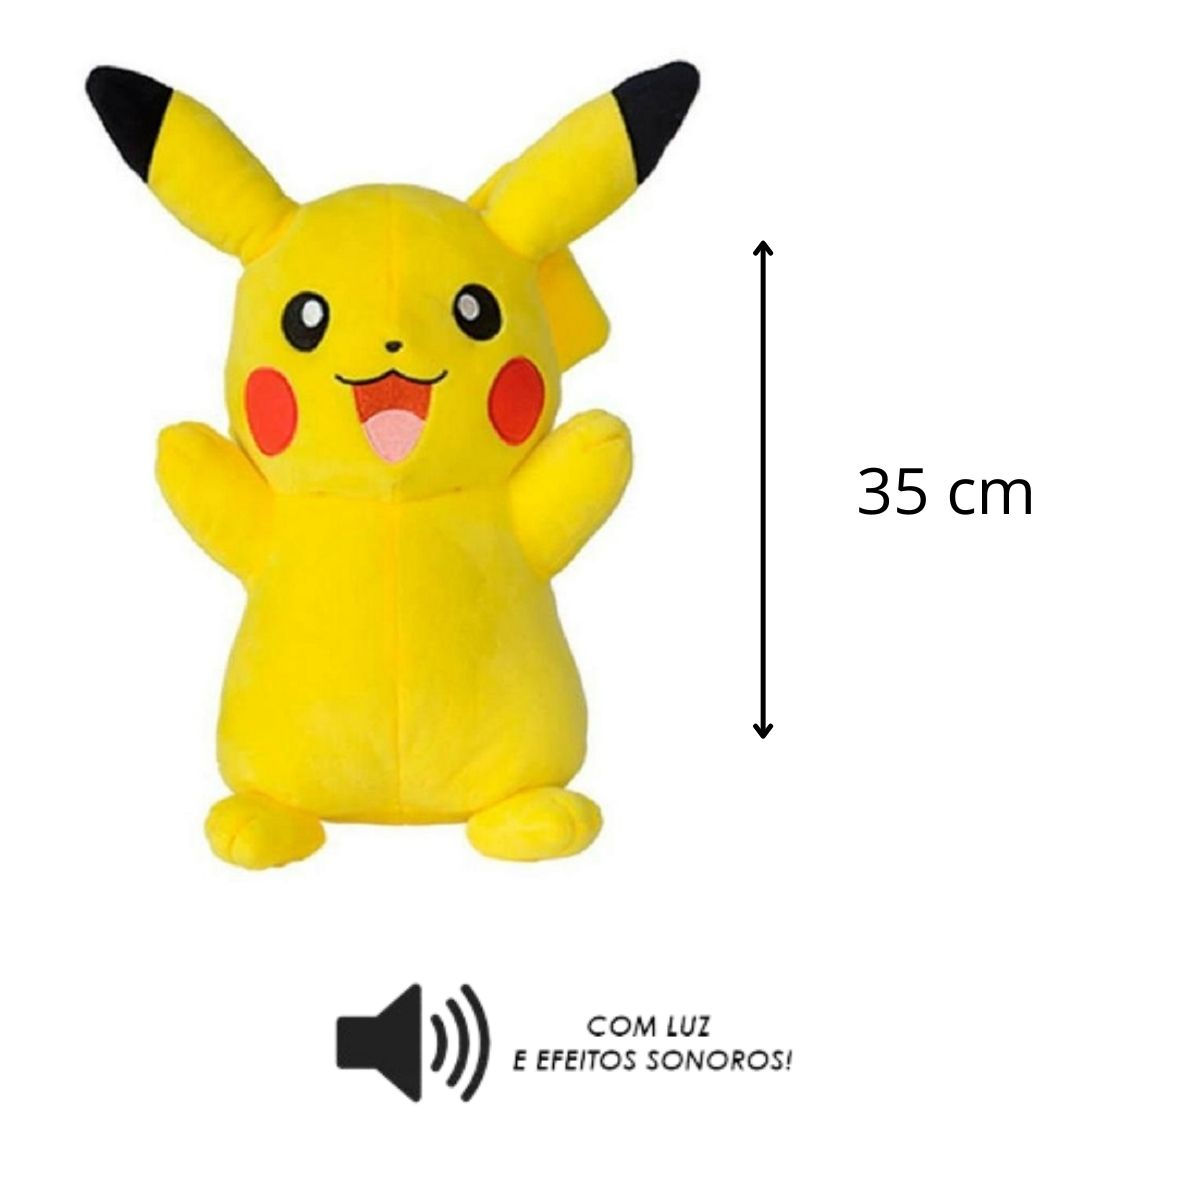 Pelucia Com Luz e Som - 20 Cm - Pokemon - Pikachu - Sunny - Ri Happy